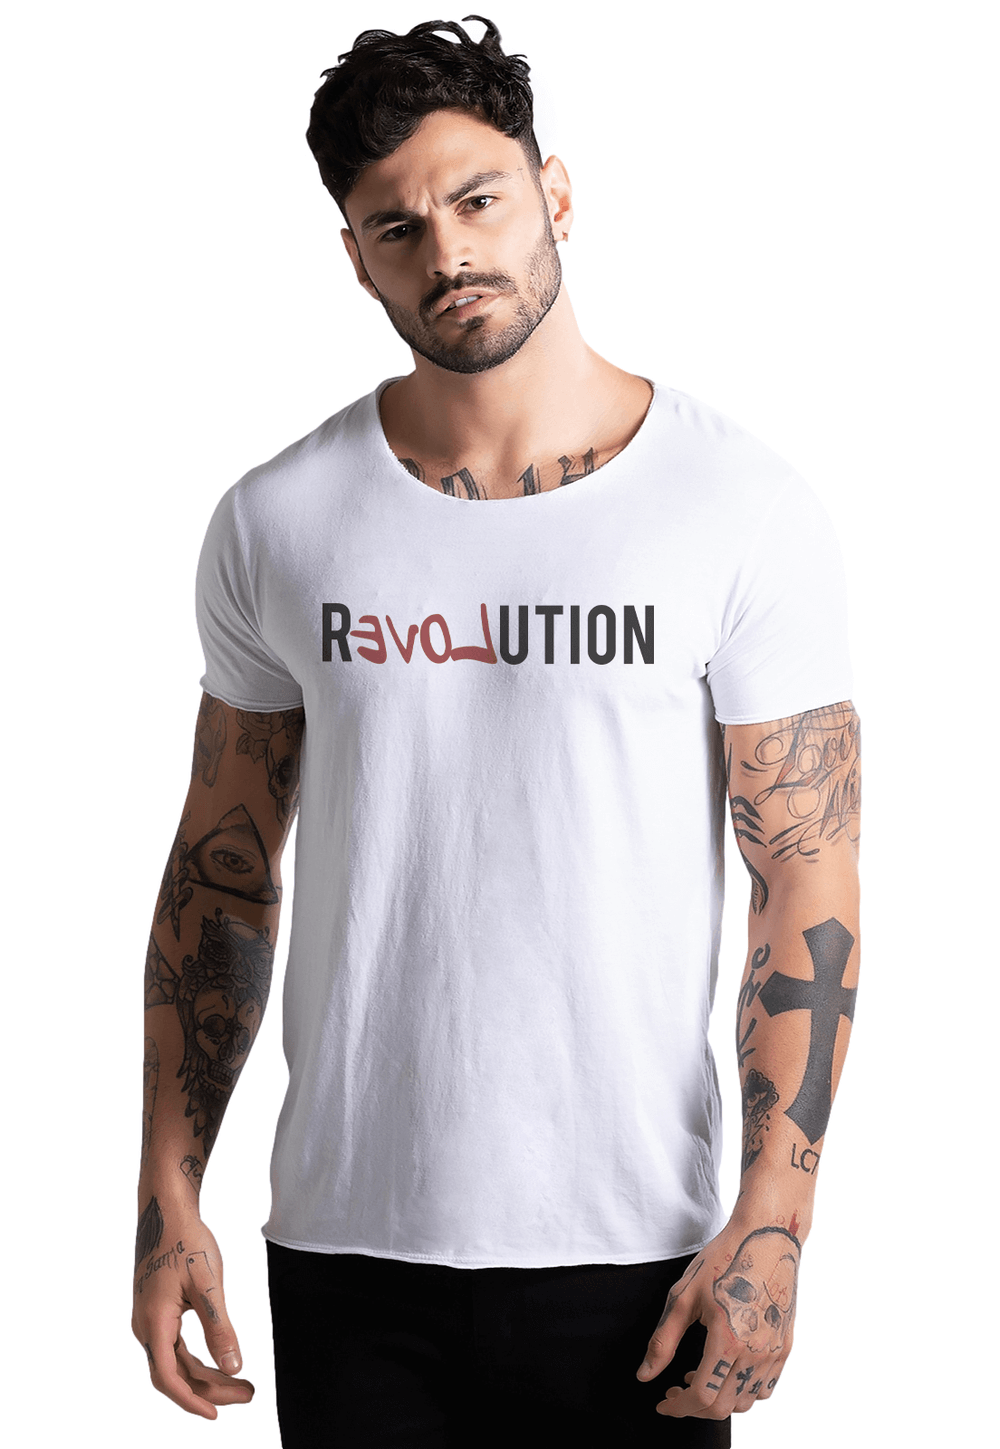 Camiseta Joss Corte a Fio Revolution DTG Cor:Branco;Tamanho:G;Genero:Masculino